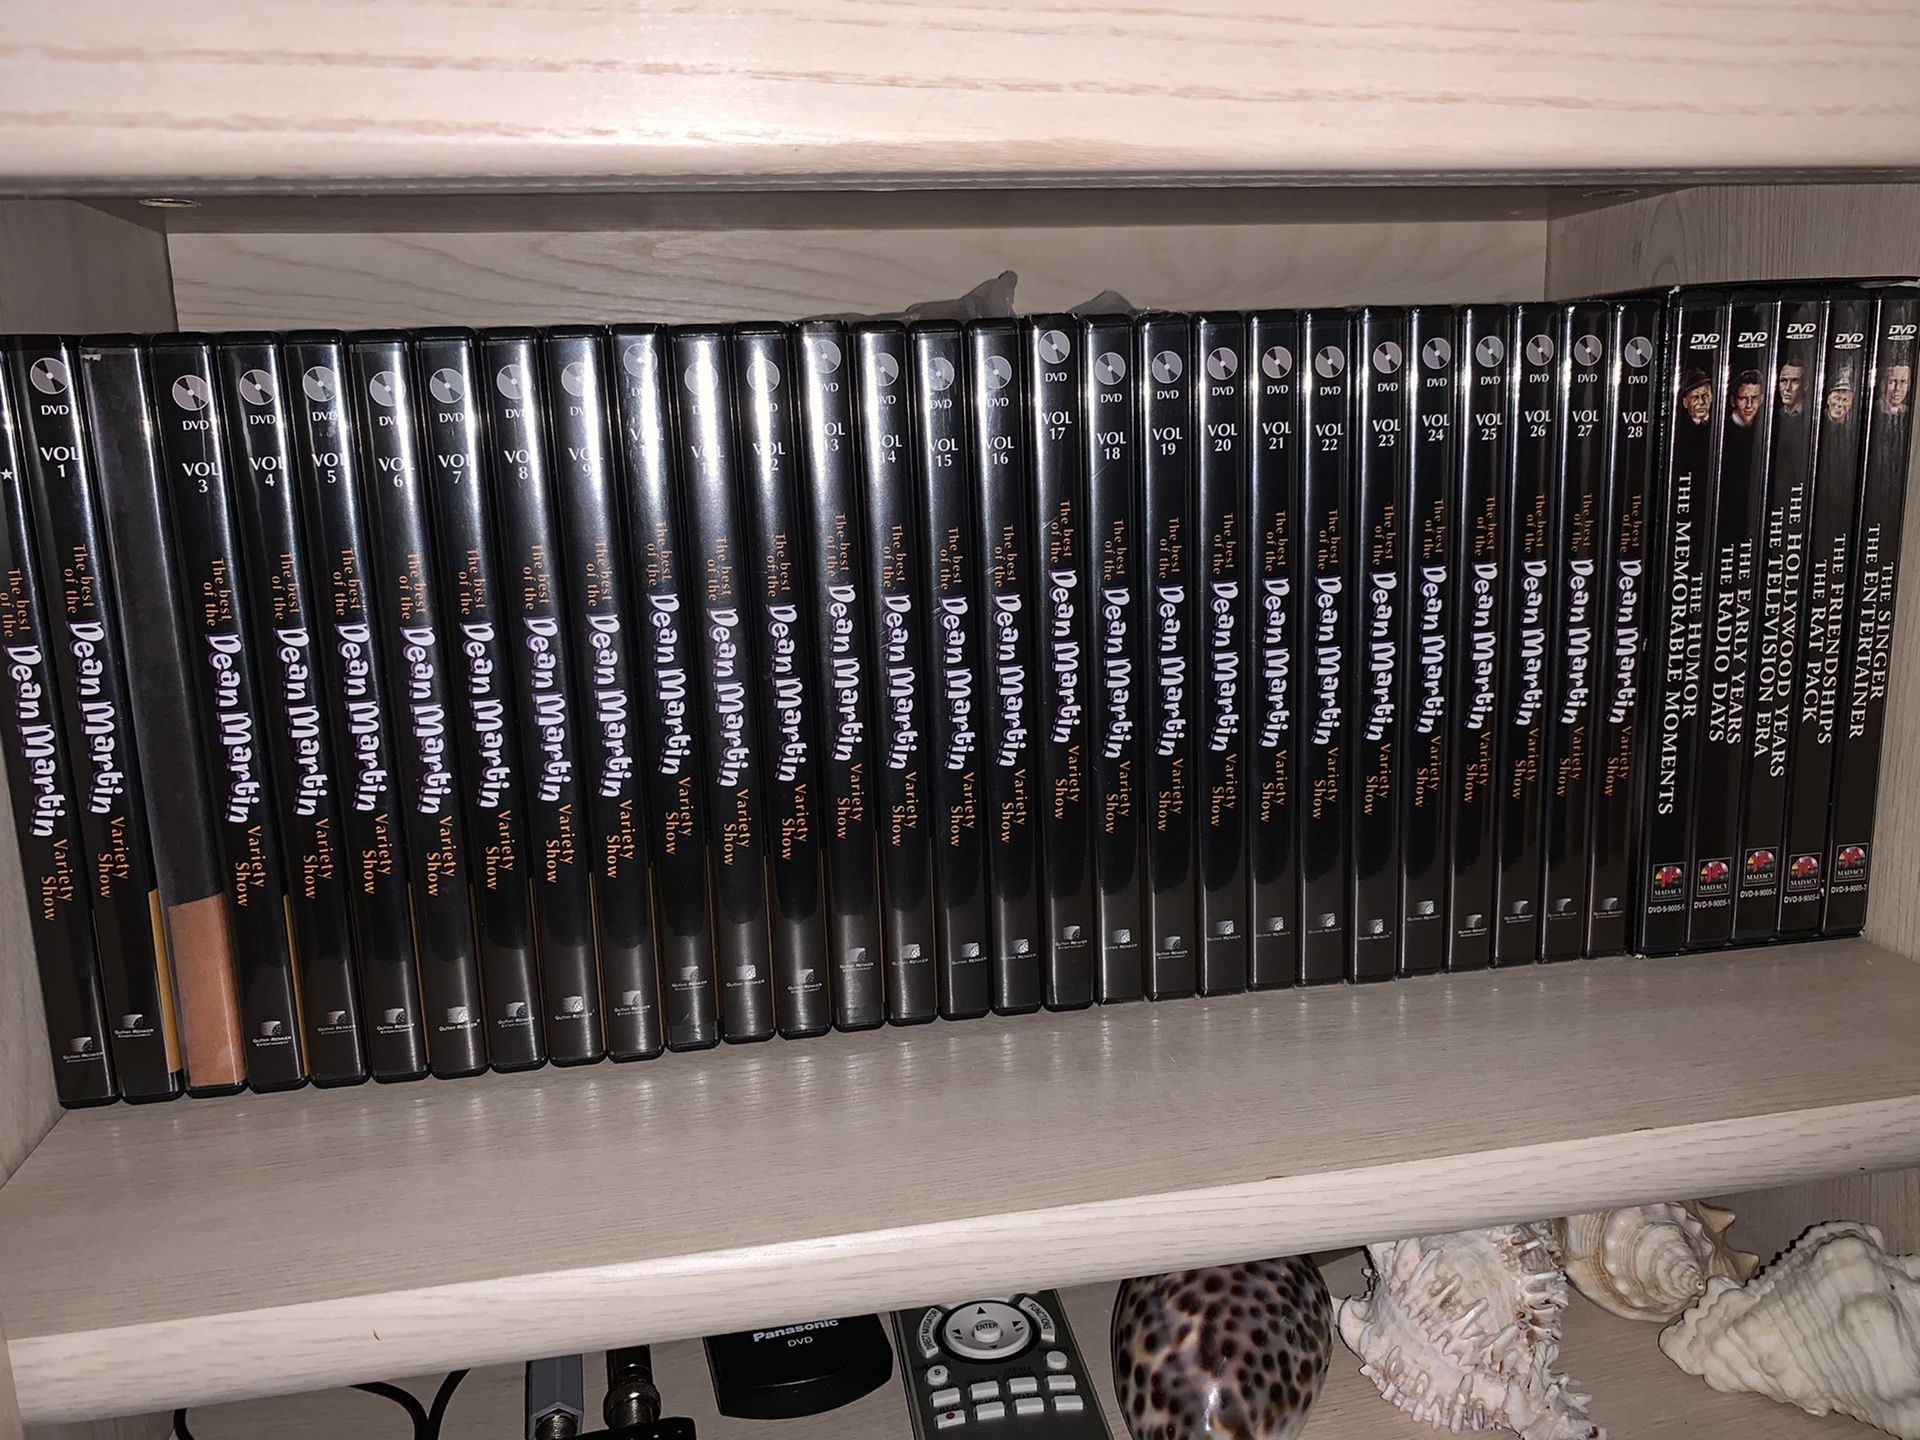 28 disc Dean Martin Variety show DVD set